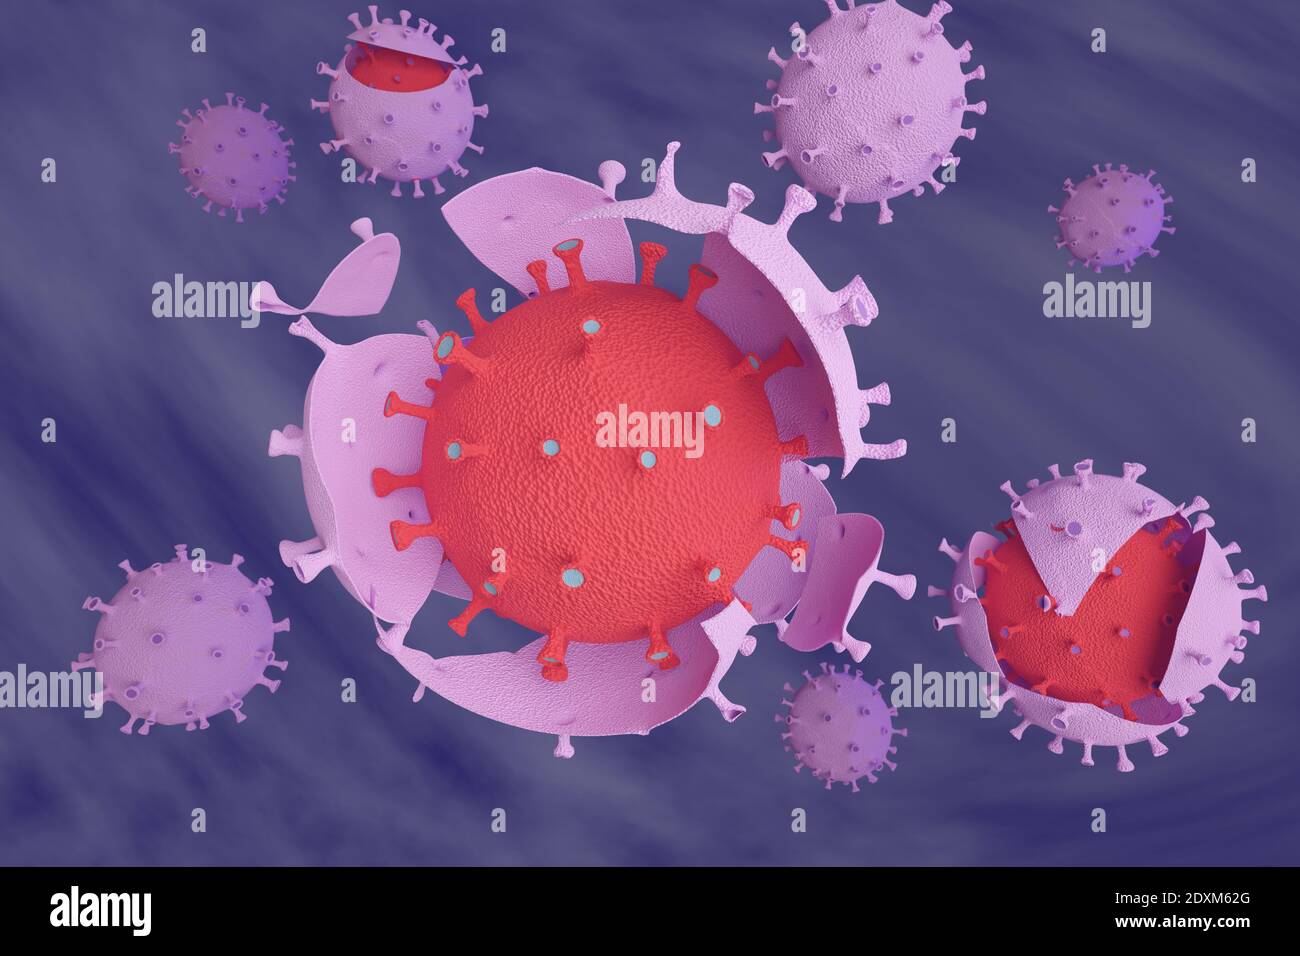 Covid 19 virus mutating into a new strain. 3d illustration. Stock Photo